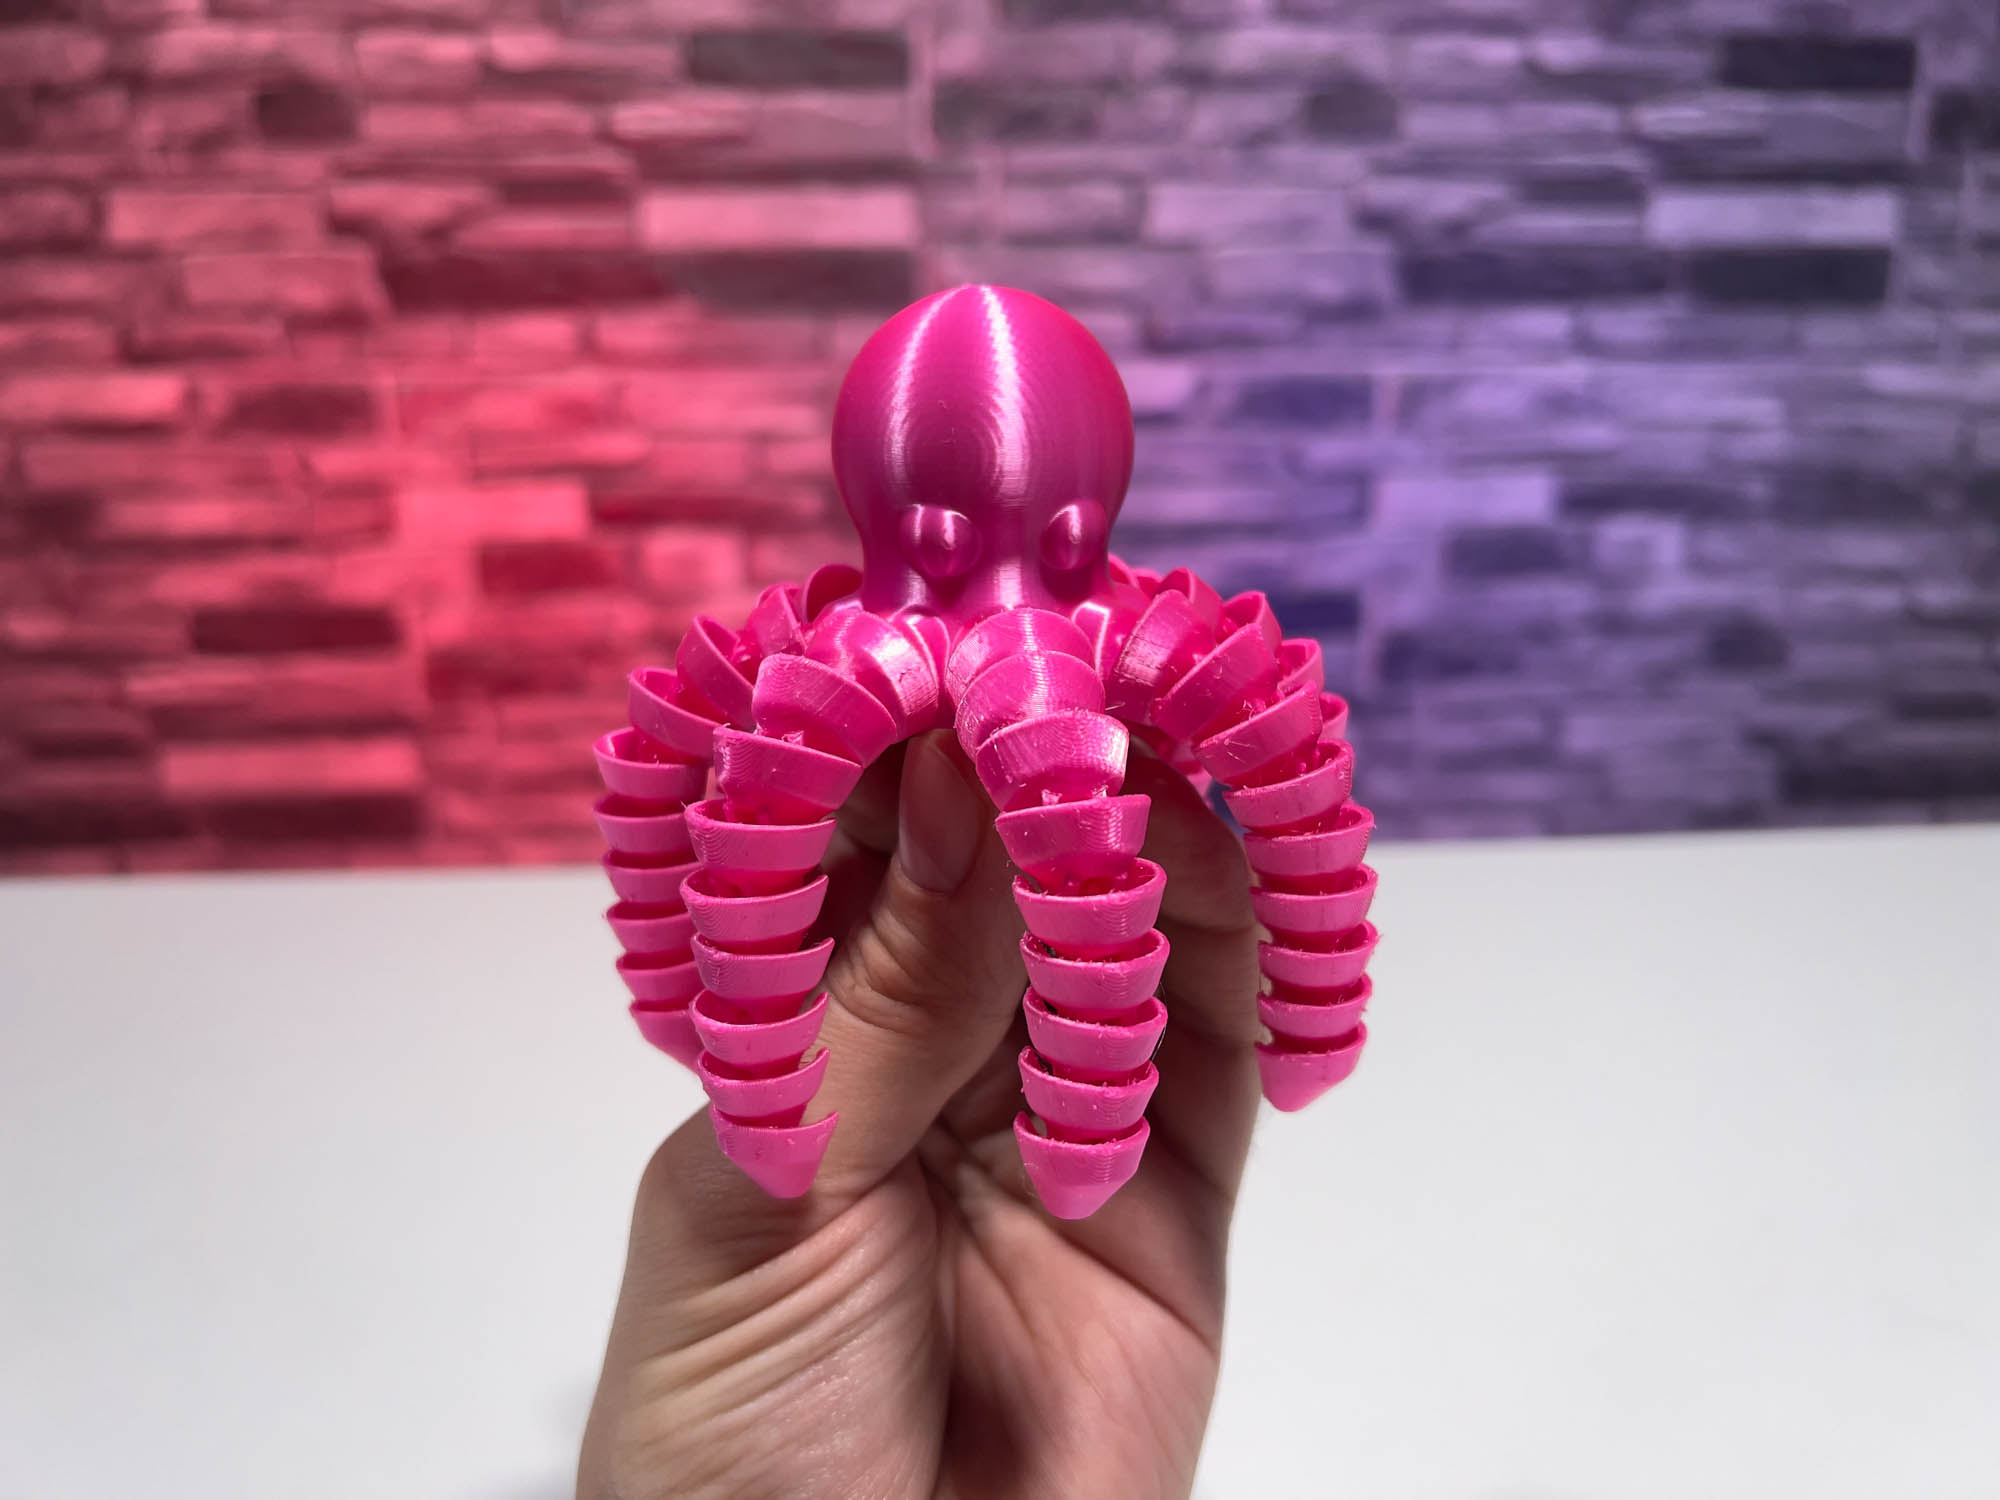 3D Printed Fun Articulated Octopus